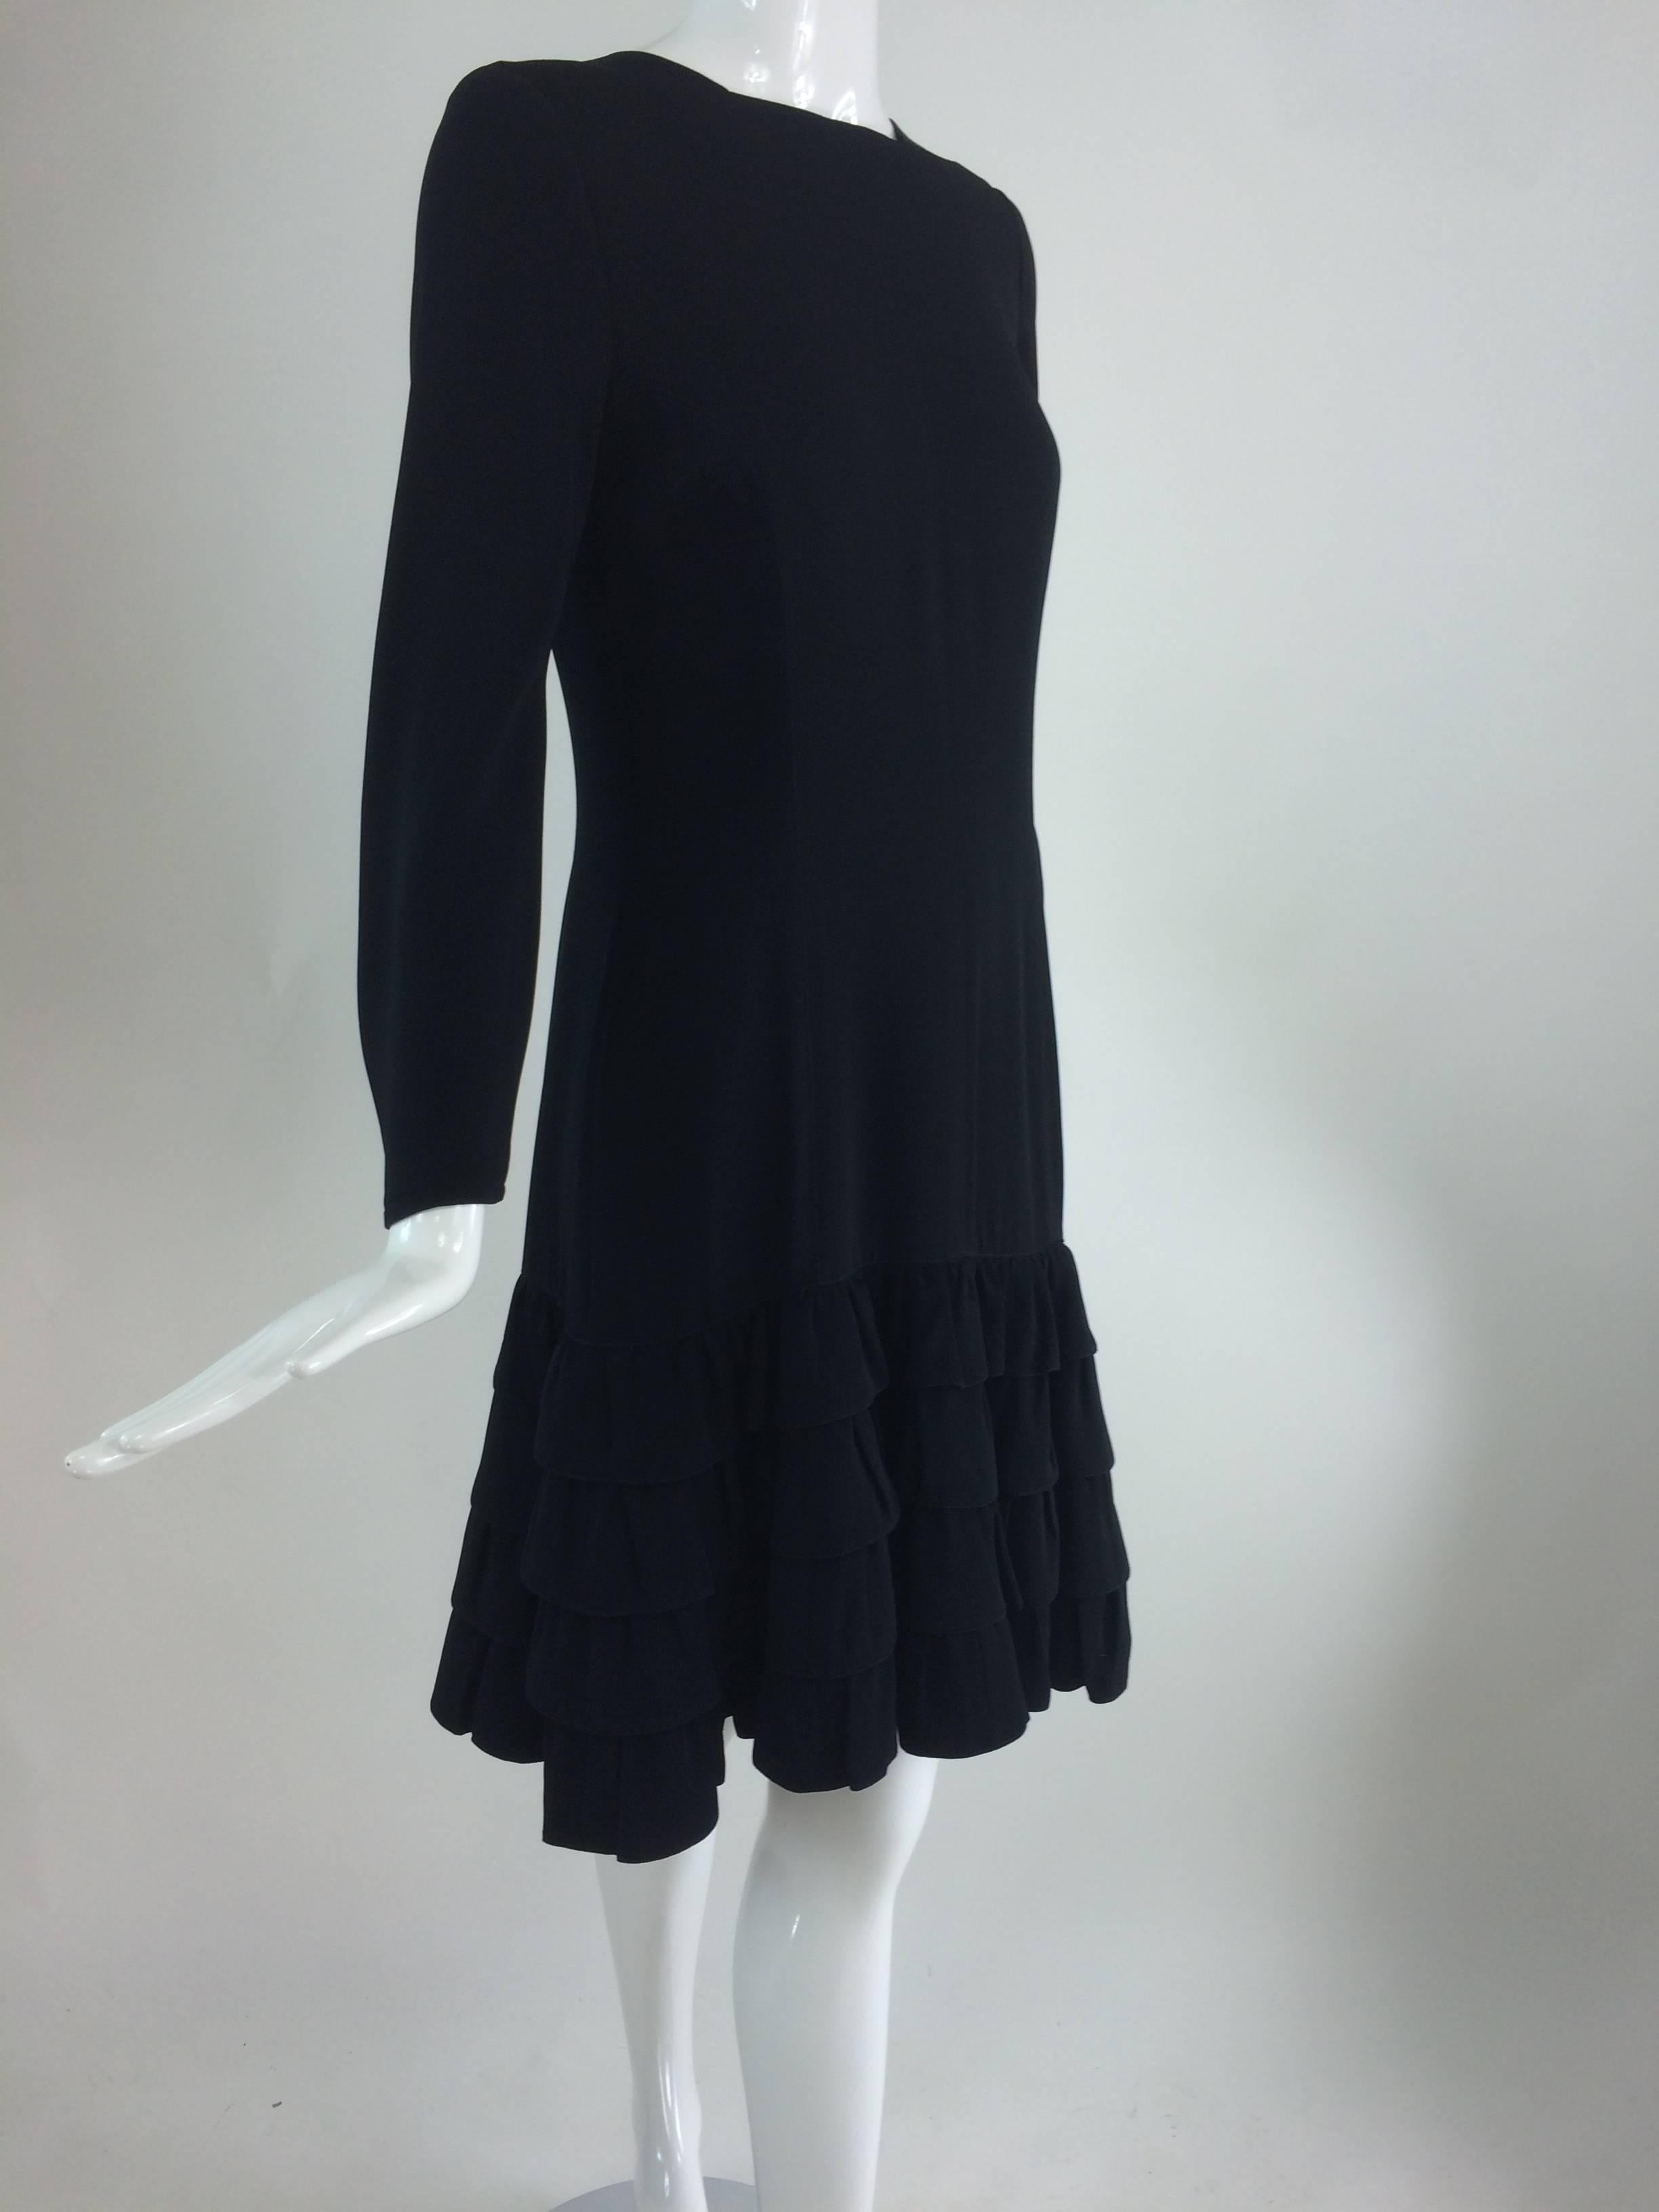 Rifat Ozbek black gabardine dress with tiered ruffle hem 1980s 1